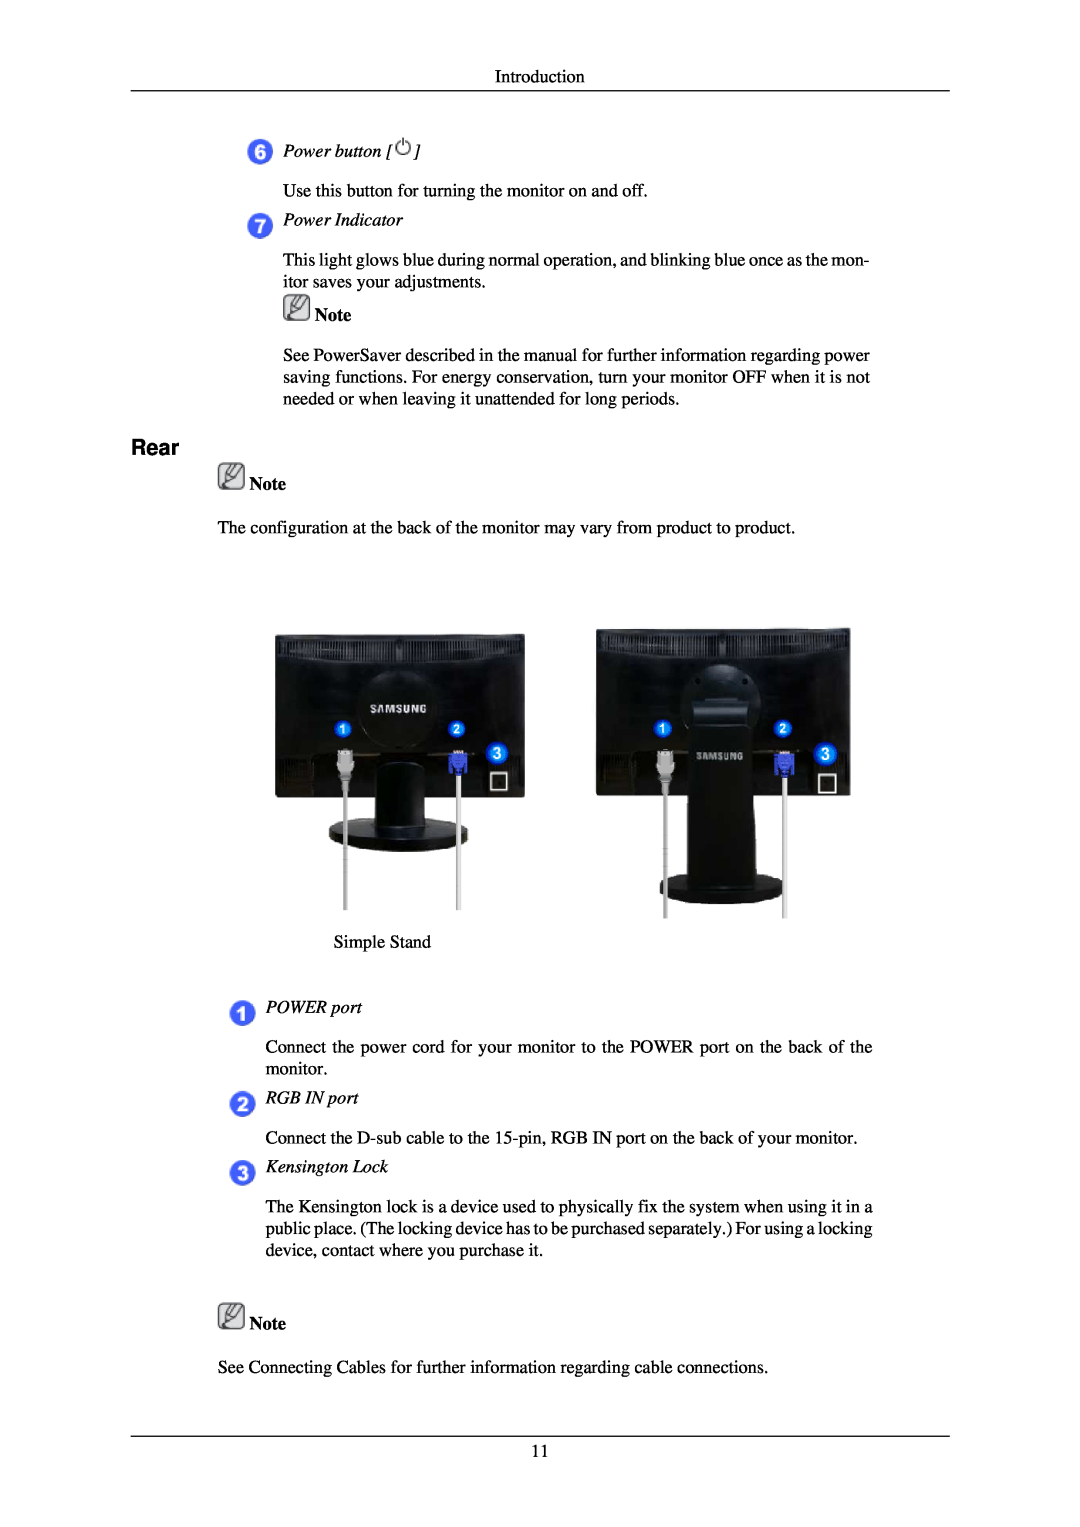 Samsung 2243NWX user manual Rear, Power button, Power Indicator, POWER port, RGB IN port, Kensington Lock 